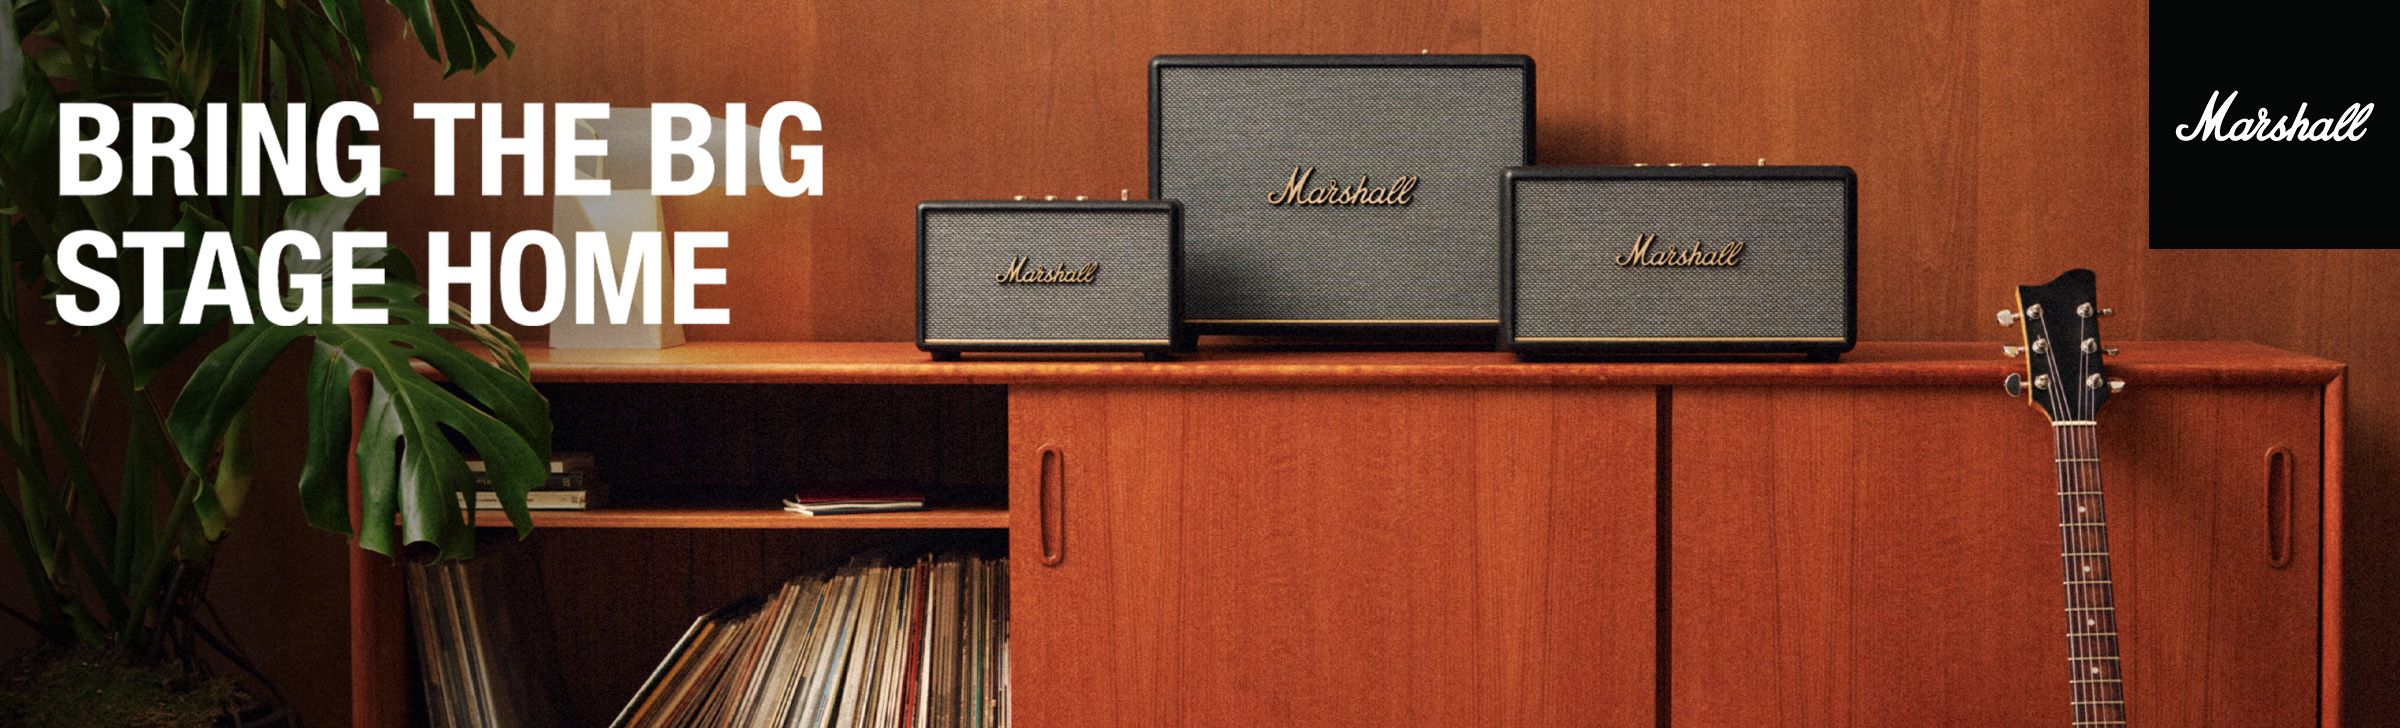 Three Marshall speakers of various sizes